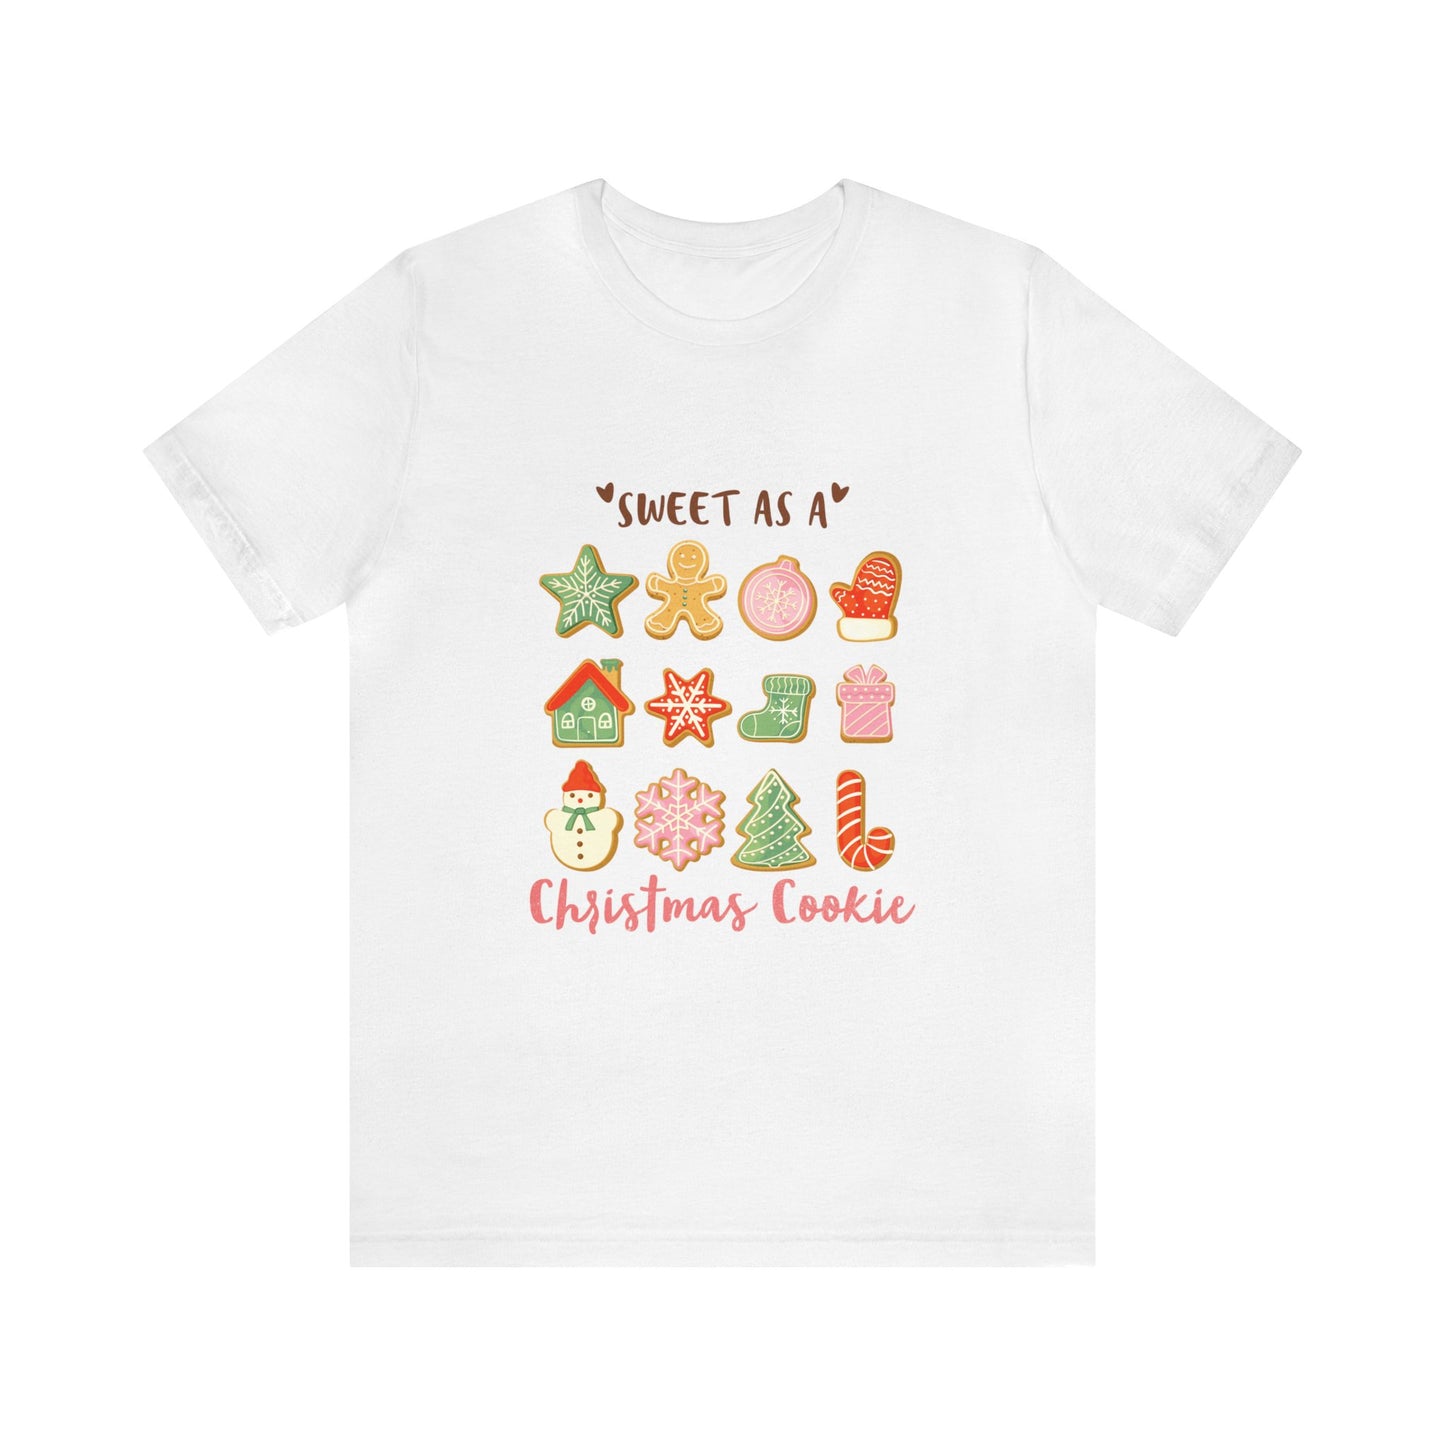 Sweet as a Christmas Cookie Women's Short Sleeve Christmas T Shirt